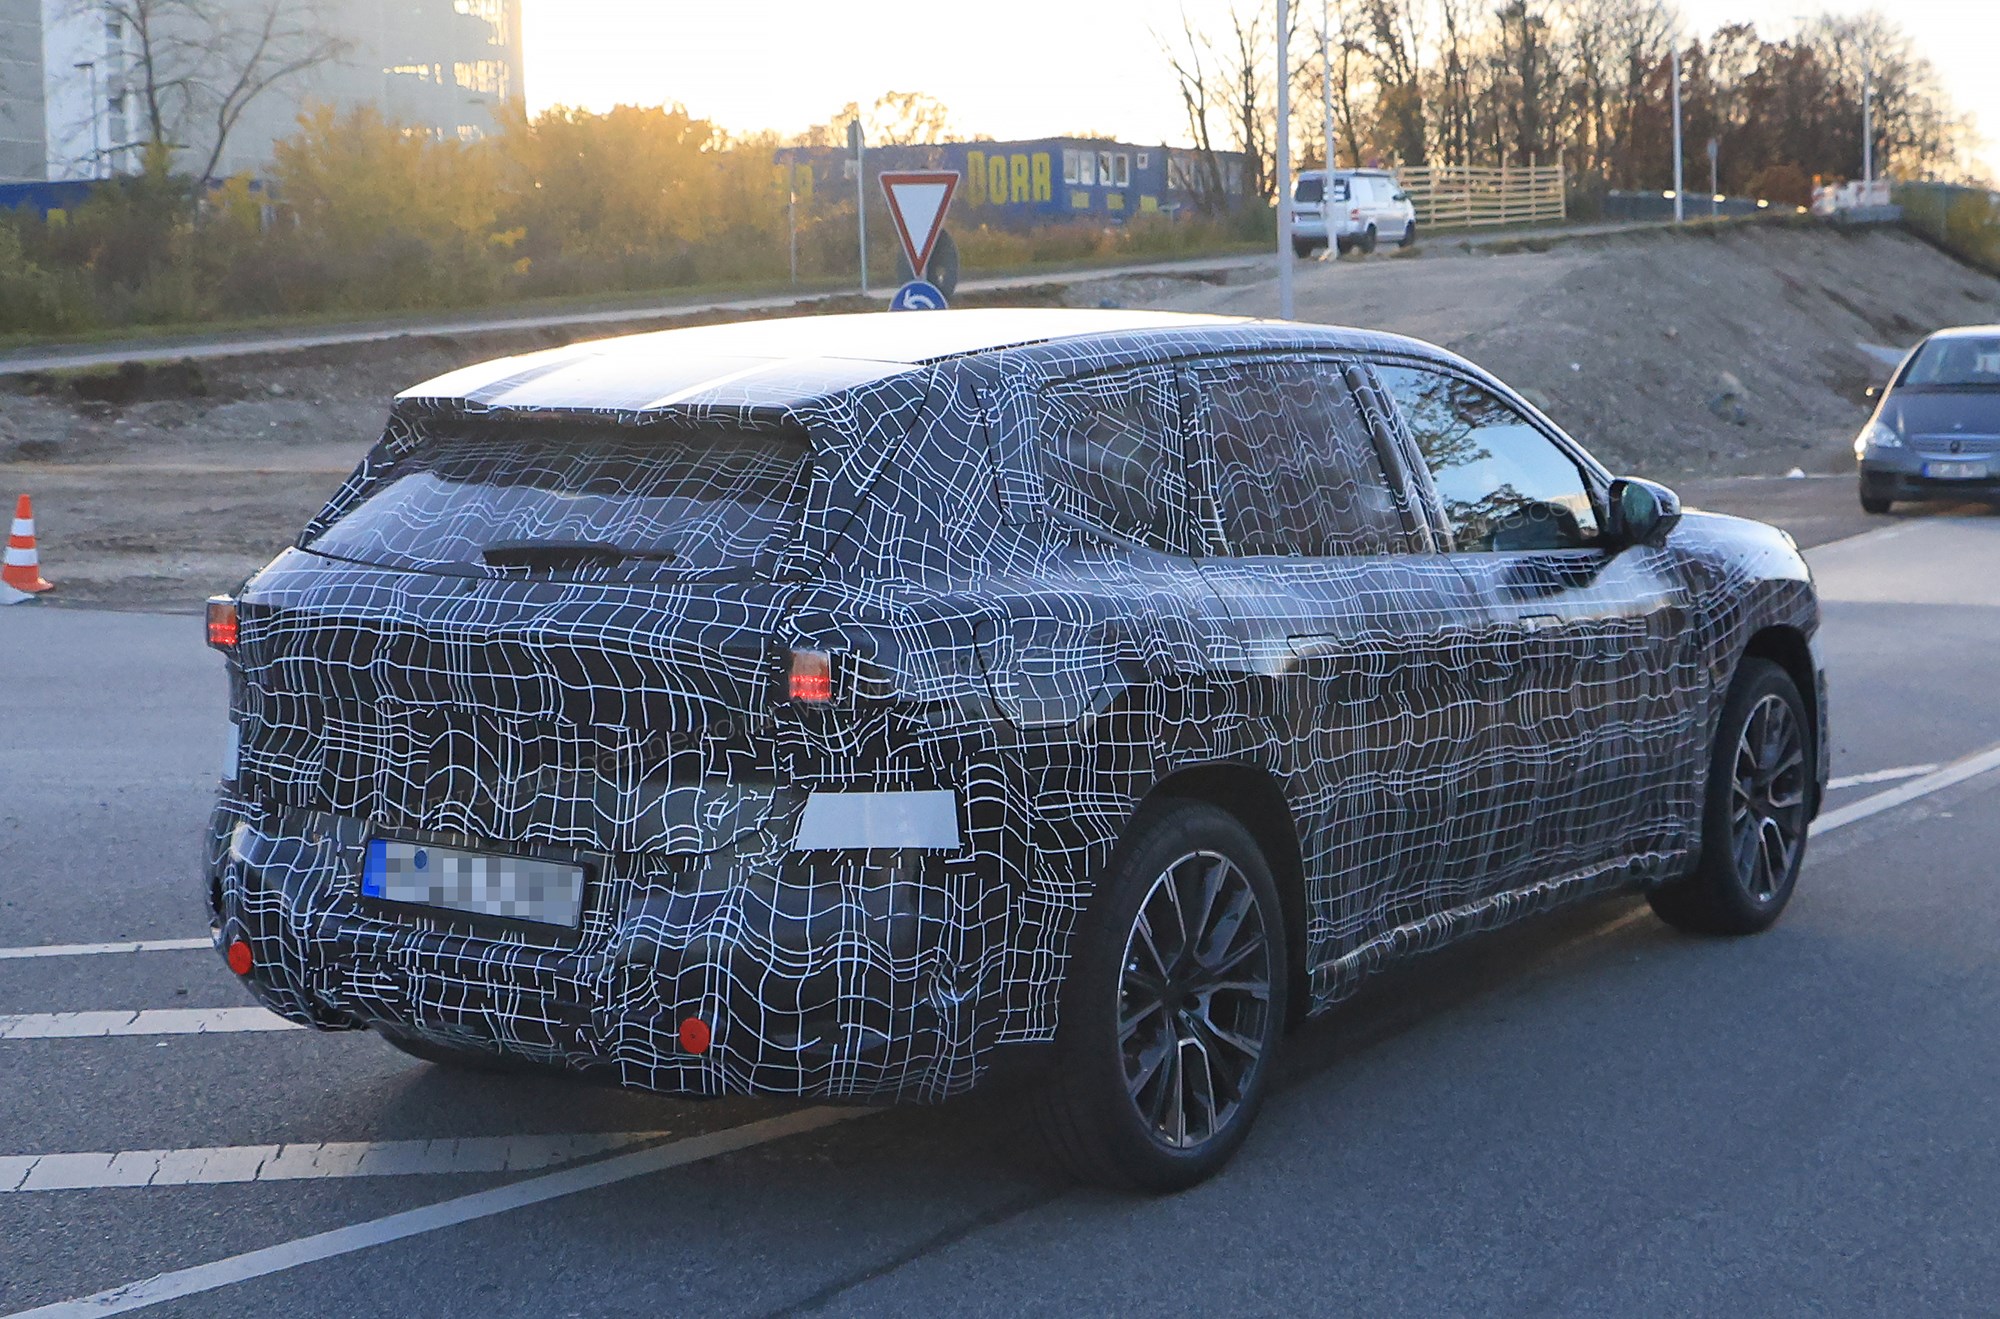 BMW Neue Klasse SUV spy photos reveal the brand's next styling